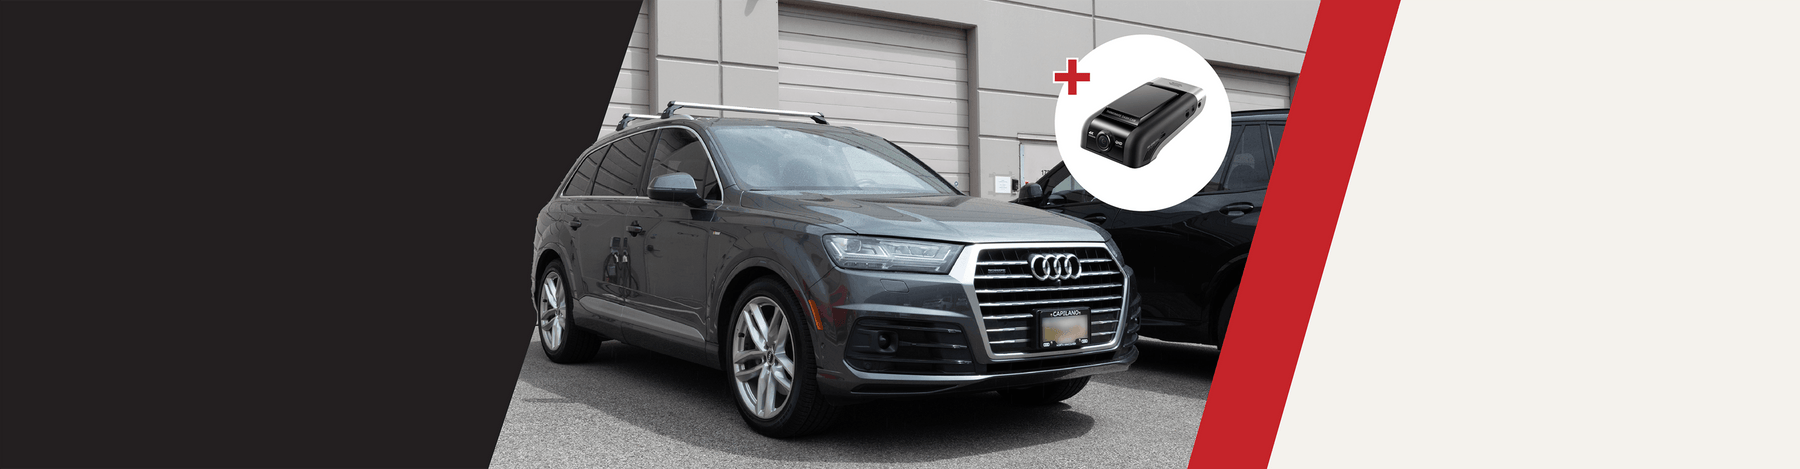 BlackboxMyCar | Dash Cam Installation: 2019 Audi Q7 x Thinkware U1000 2-CH 4K Dash Cam (Hardwire for Parking Surveillance Mode) -  - BlackboxMyCar